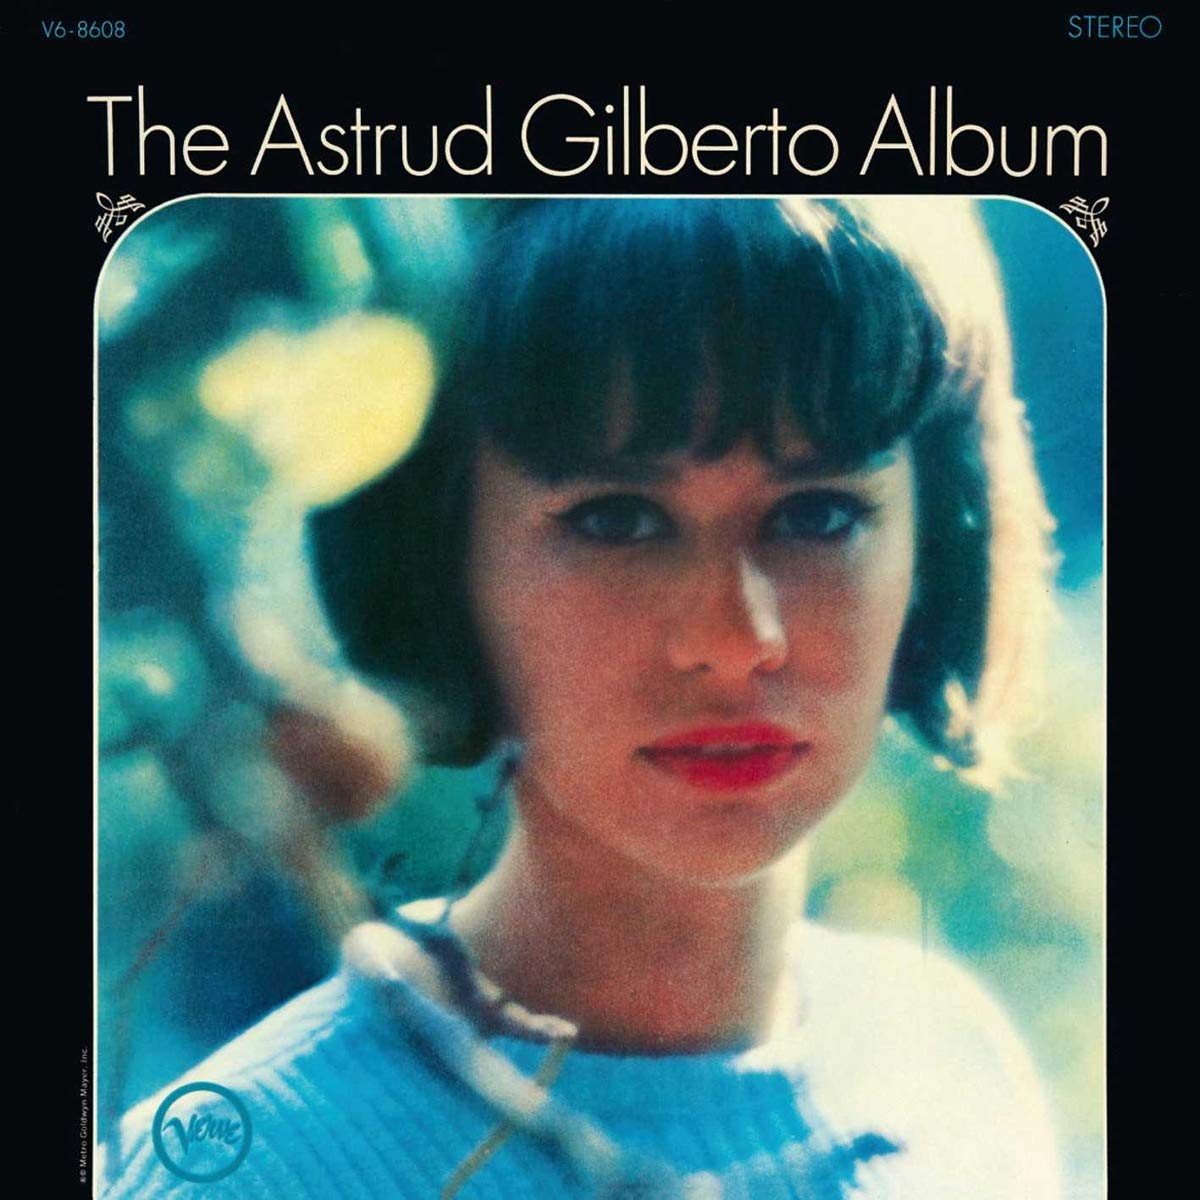 Astrud Gilberto “Astrud Gilberto Album” LP 1